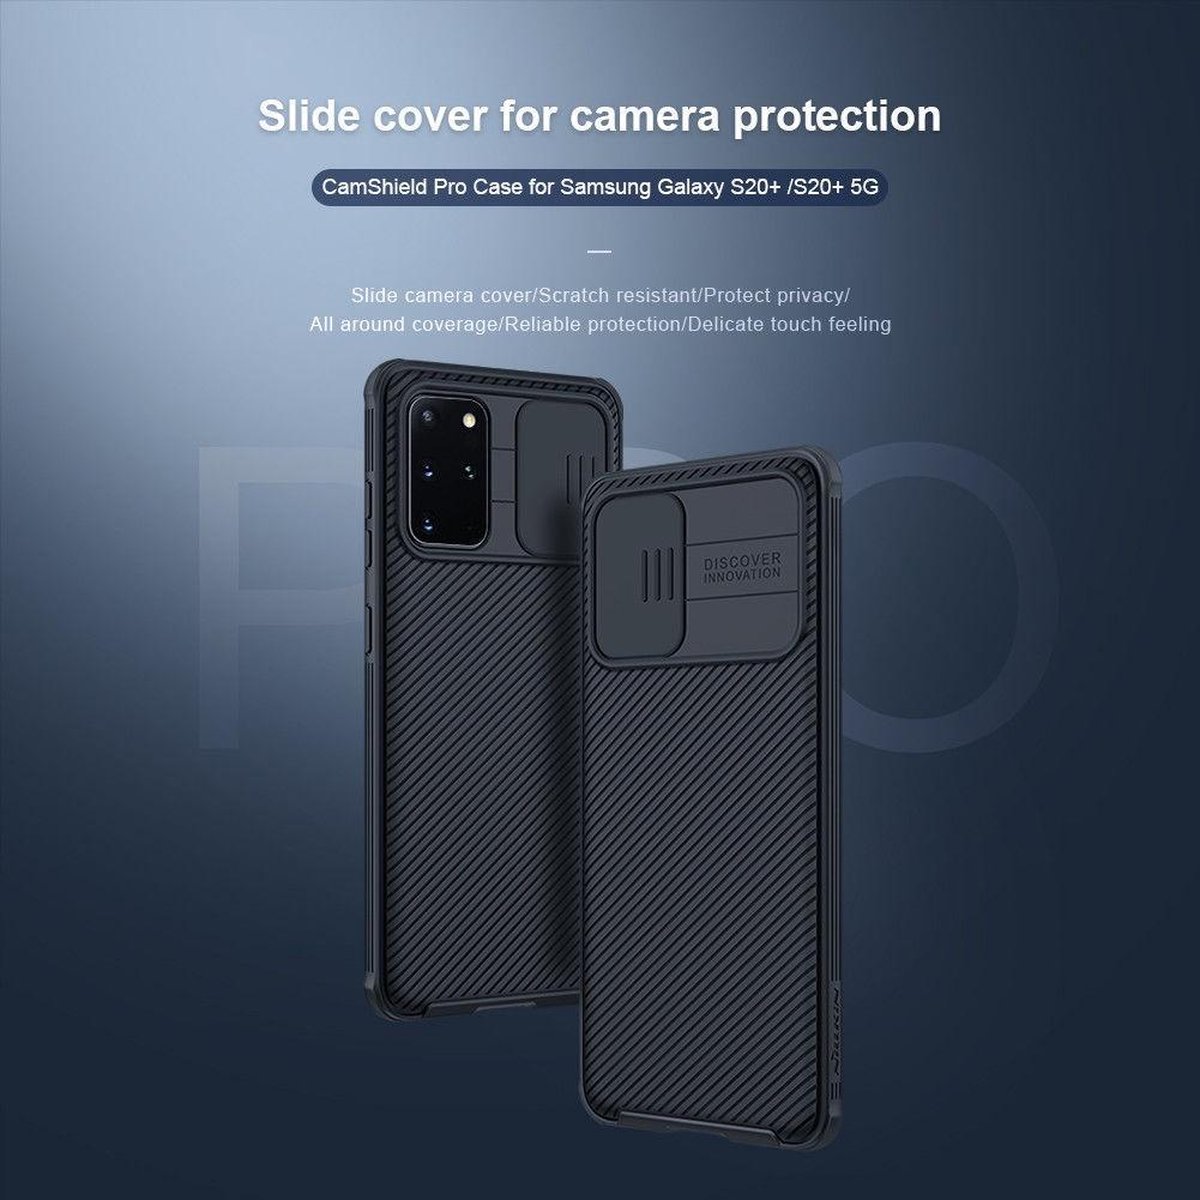 Vervolgen Trots wedstrijd Samsung Galaxy Galaxy S20 Plus / S20 Plus 5G cover - CamShield Pro Armor  Case - Zwart | bol.com